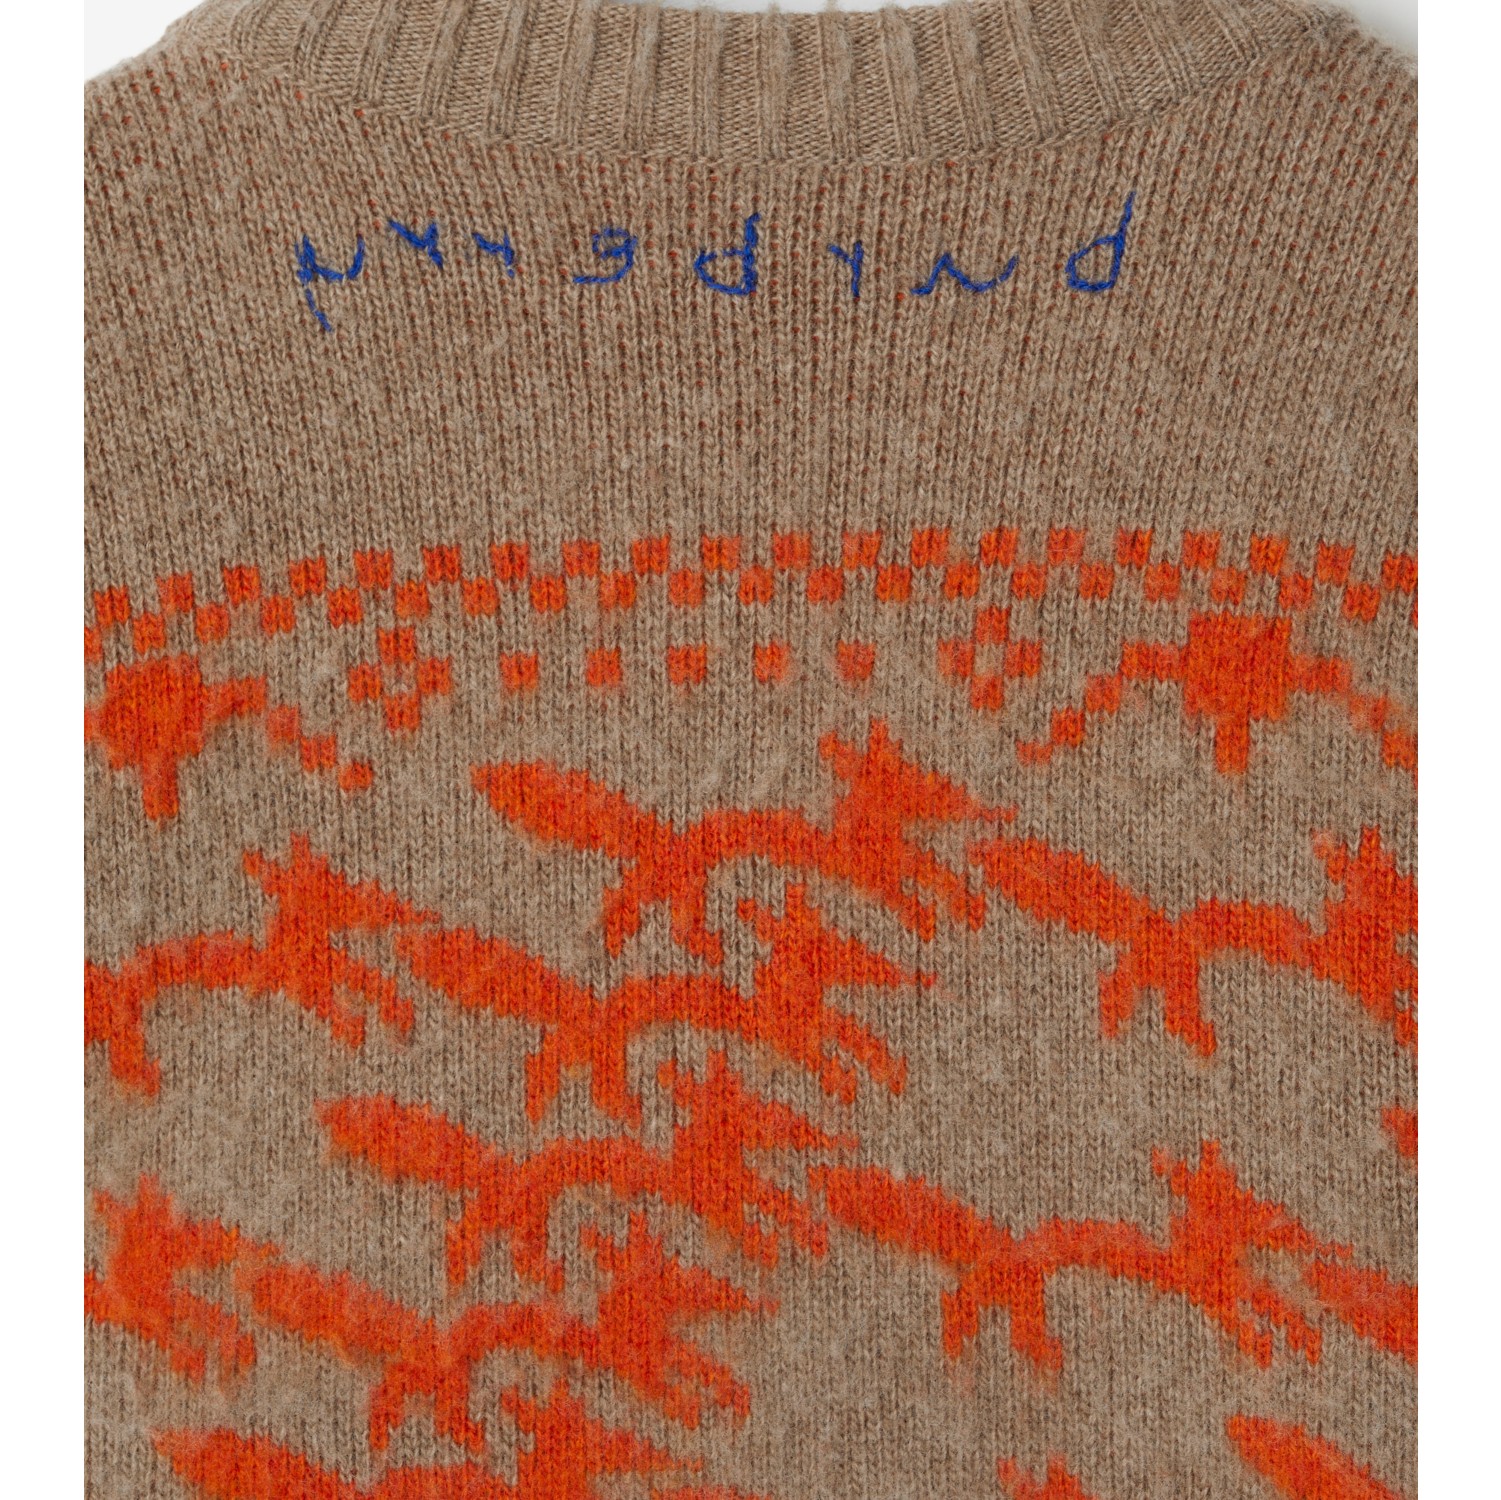 Cropped Fox Wool Sweater